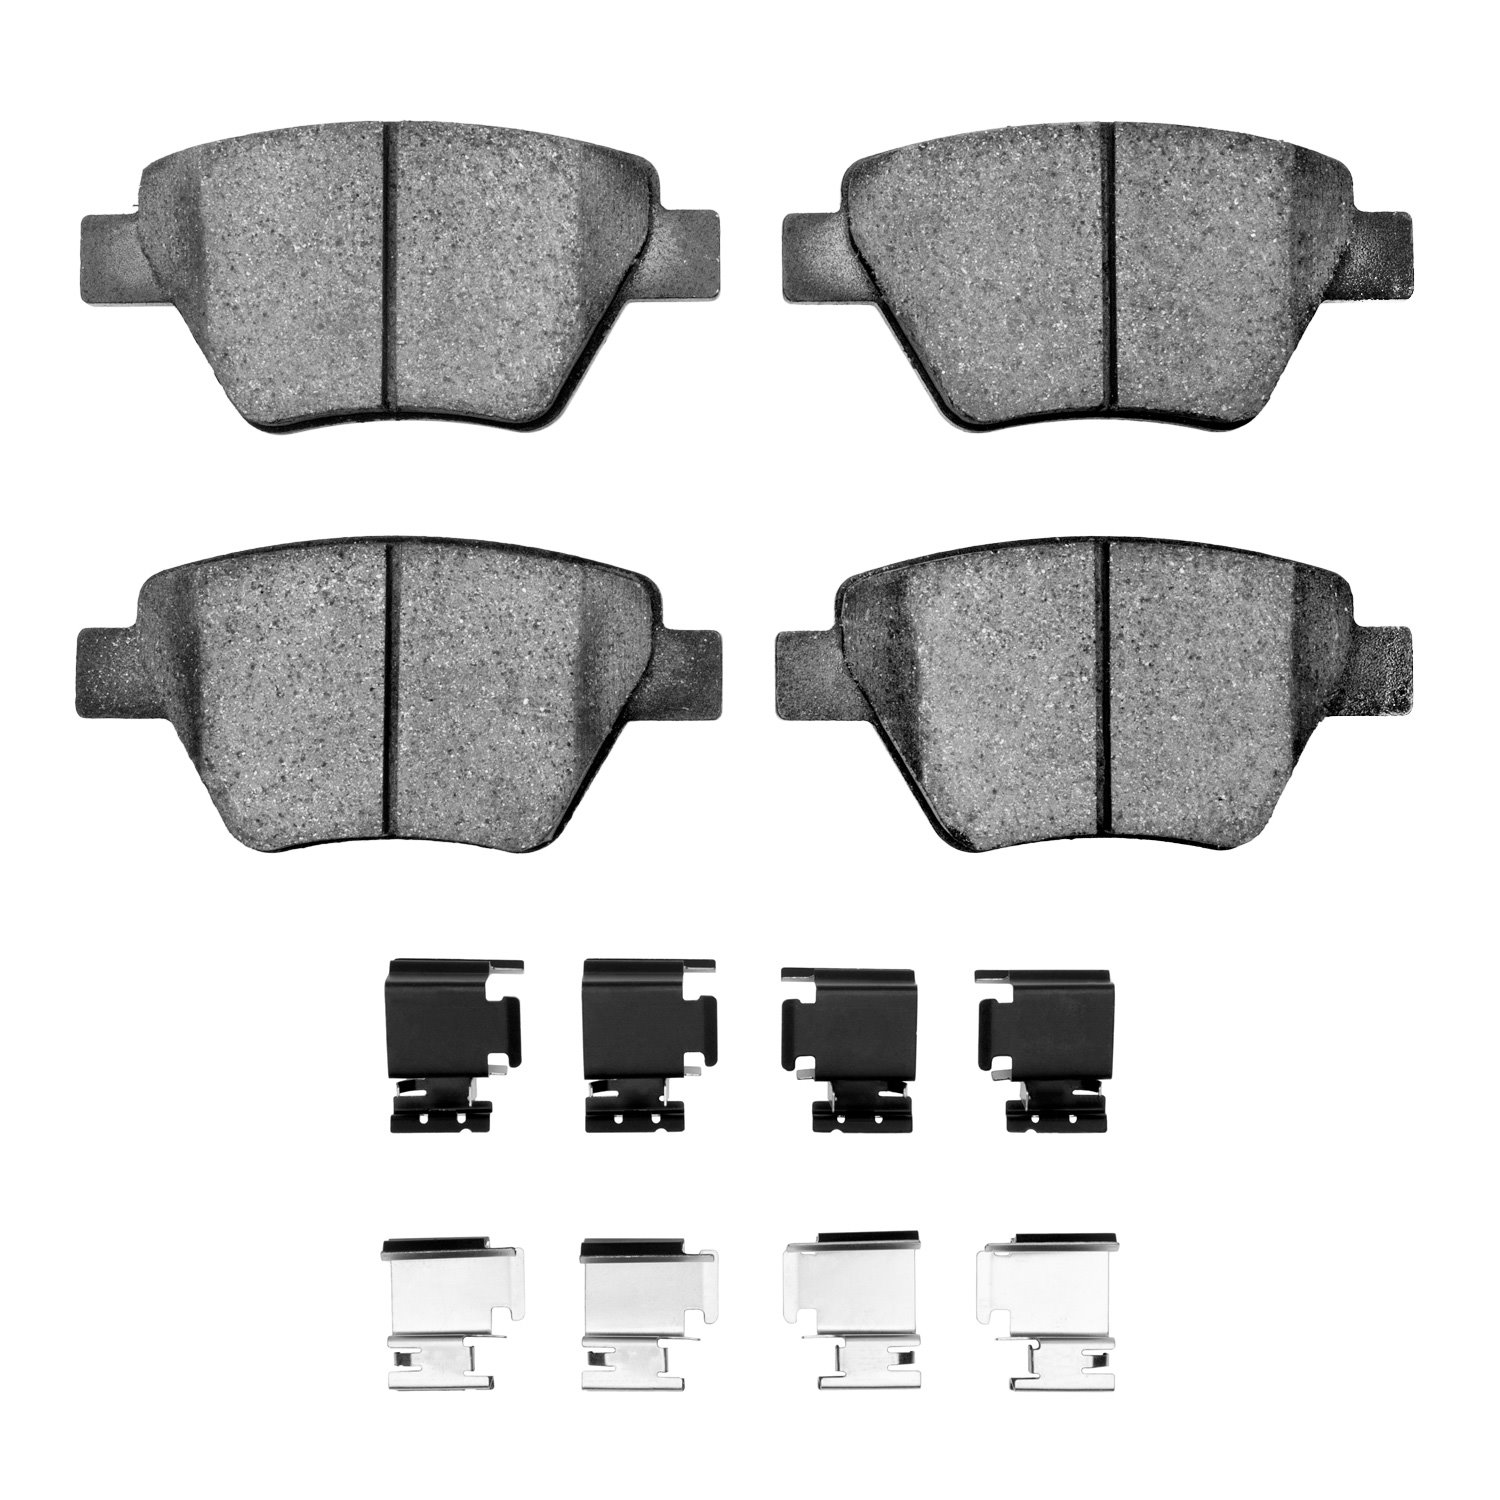 1310-1456-01 3000-Series Ceramic Brake Pads & Hardware Kit, 2005-2016 Audi/Volkswagen, Position: Rear